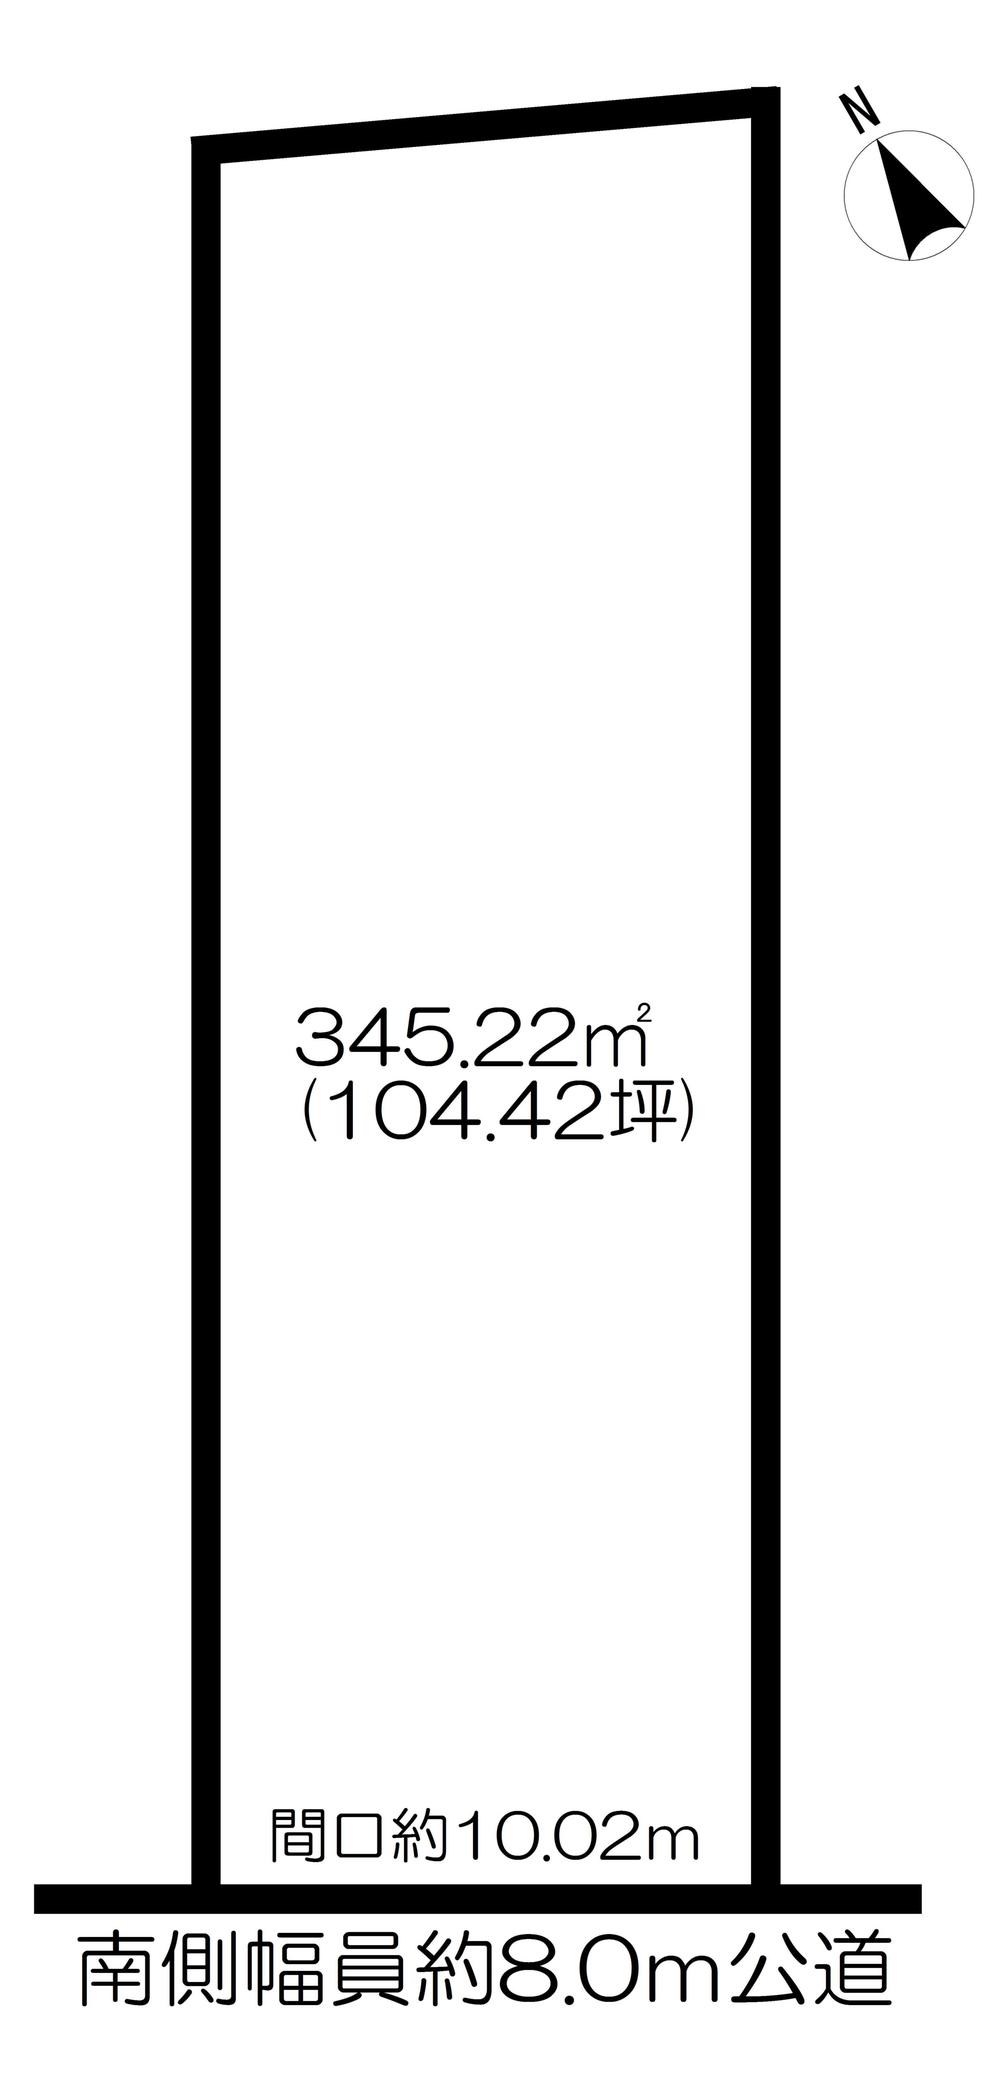 Compartment figure. Land price 28.8 million yen, Land area 345.22 sq m